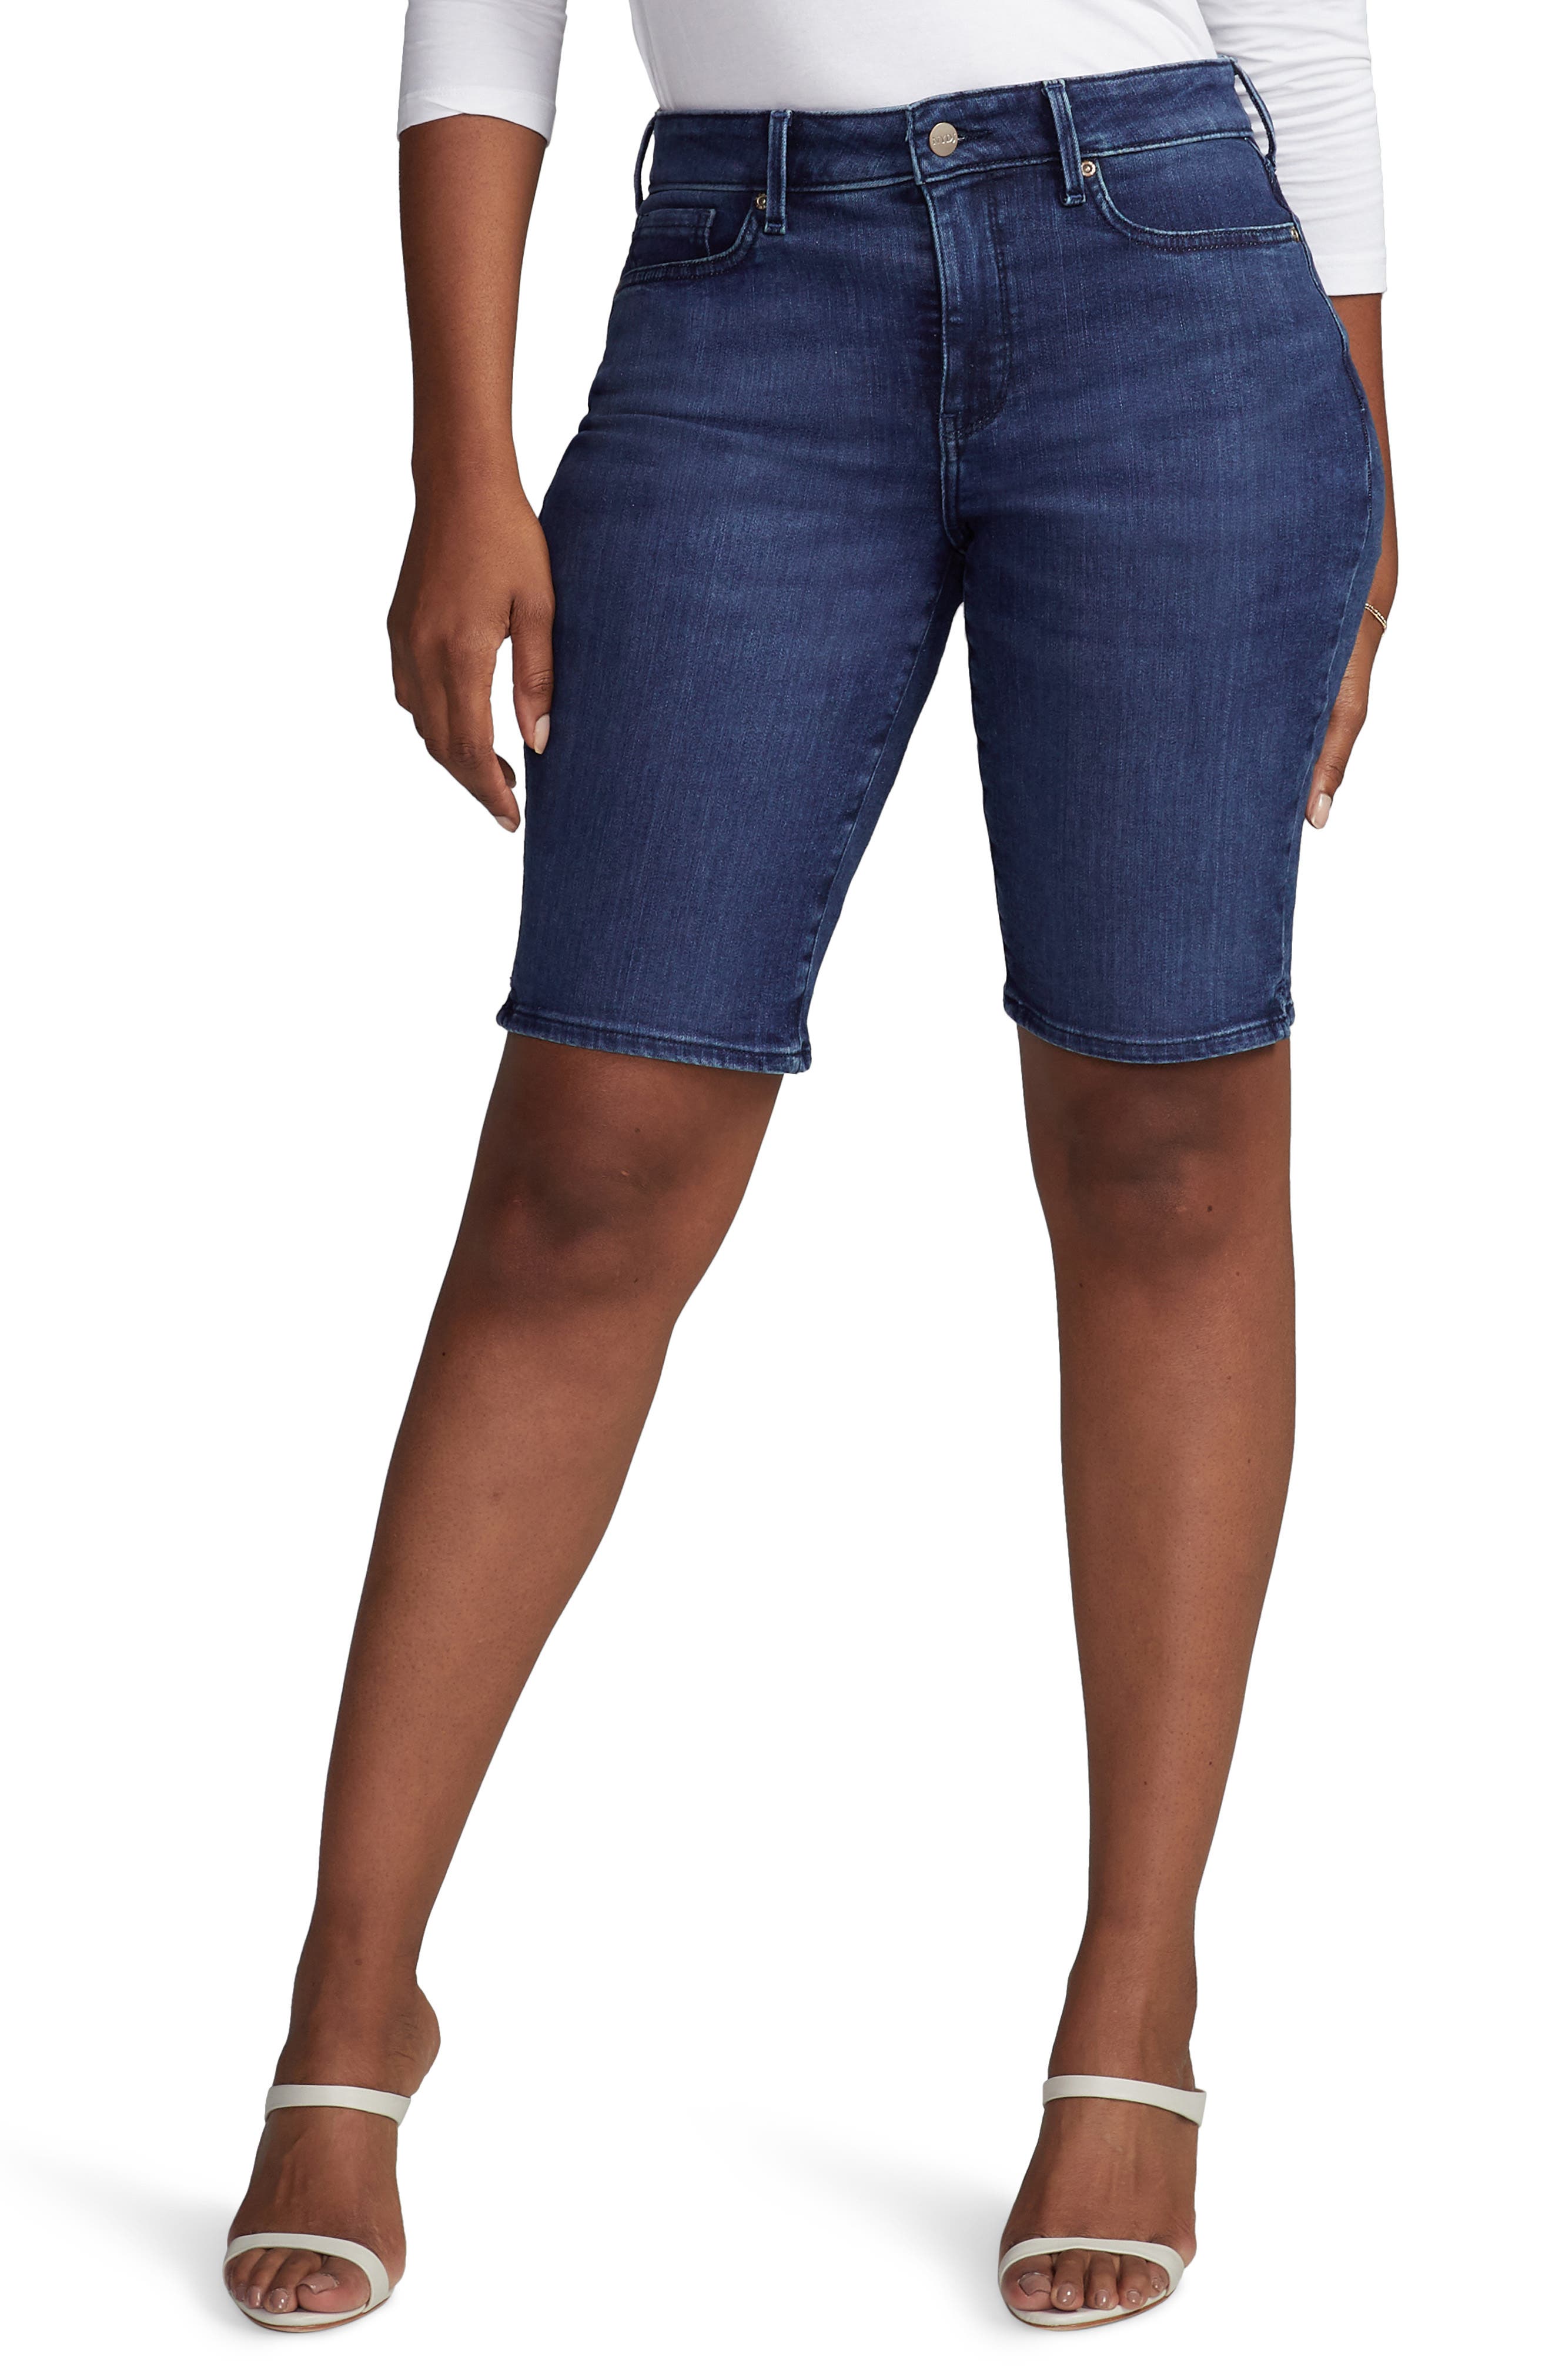 bermuda blue jean shorts